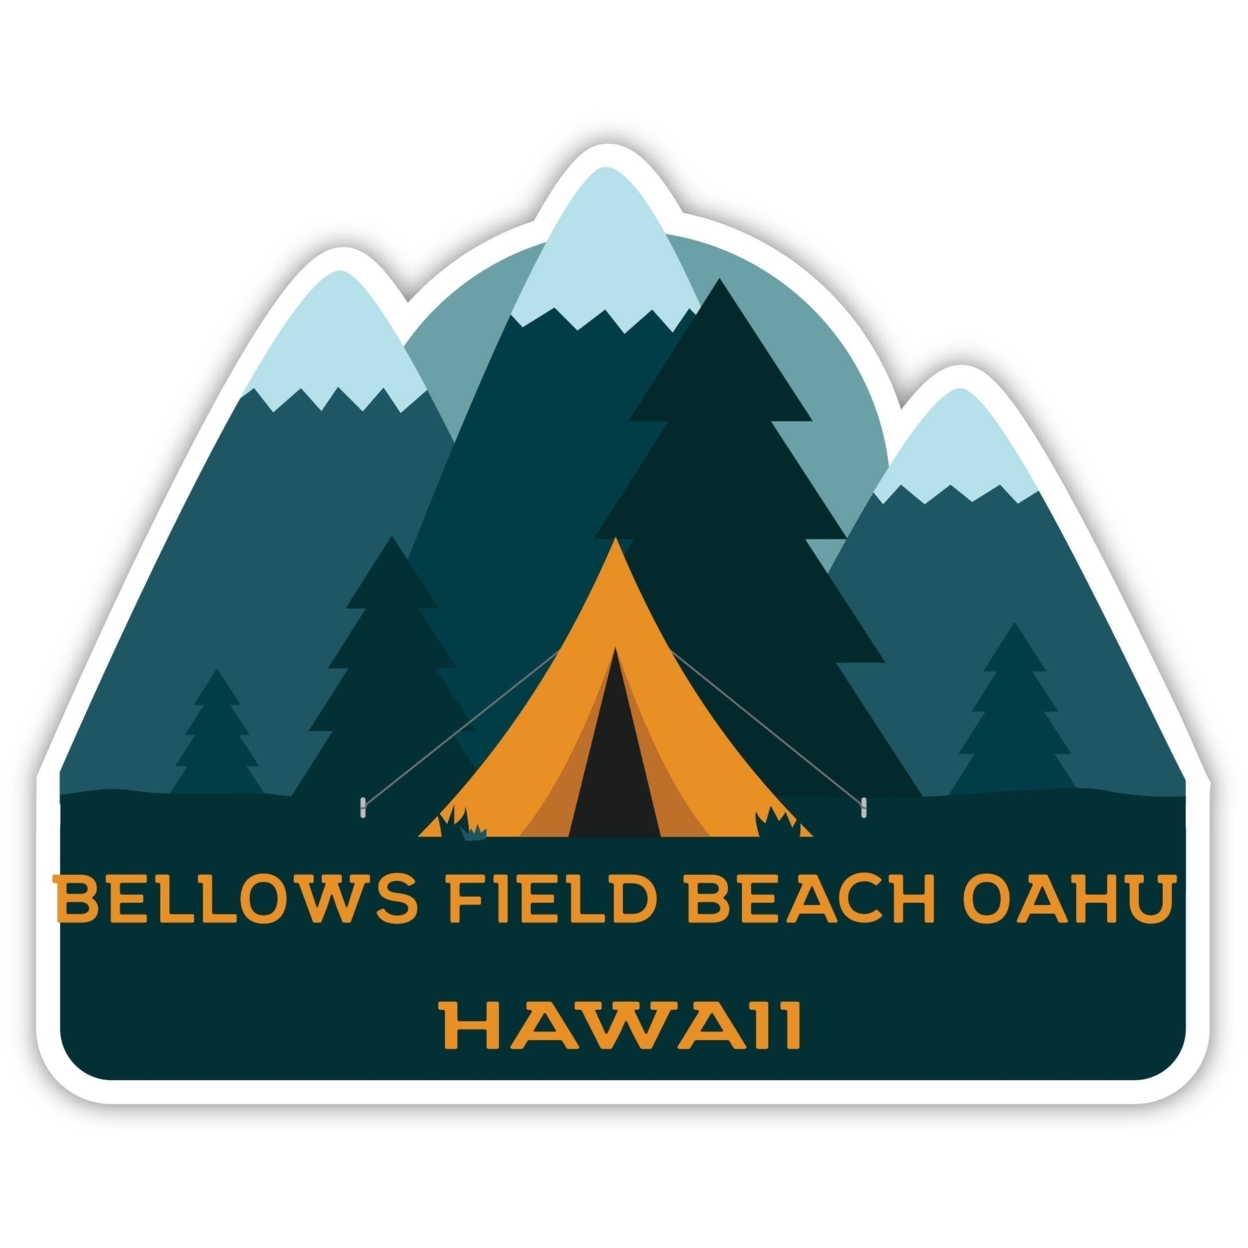 Bellows Field Beach Oahu Hawaii Souvenir Decorative Stickers (Choose Theme And Size) - Single Unit, 2-Inch, Tent